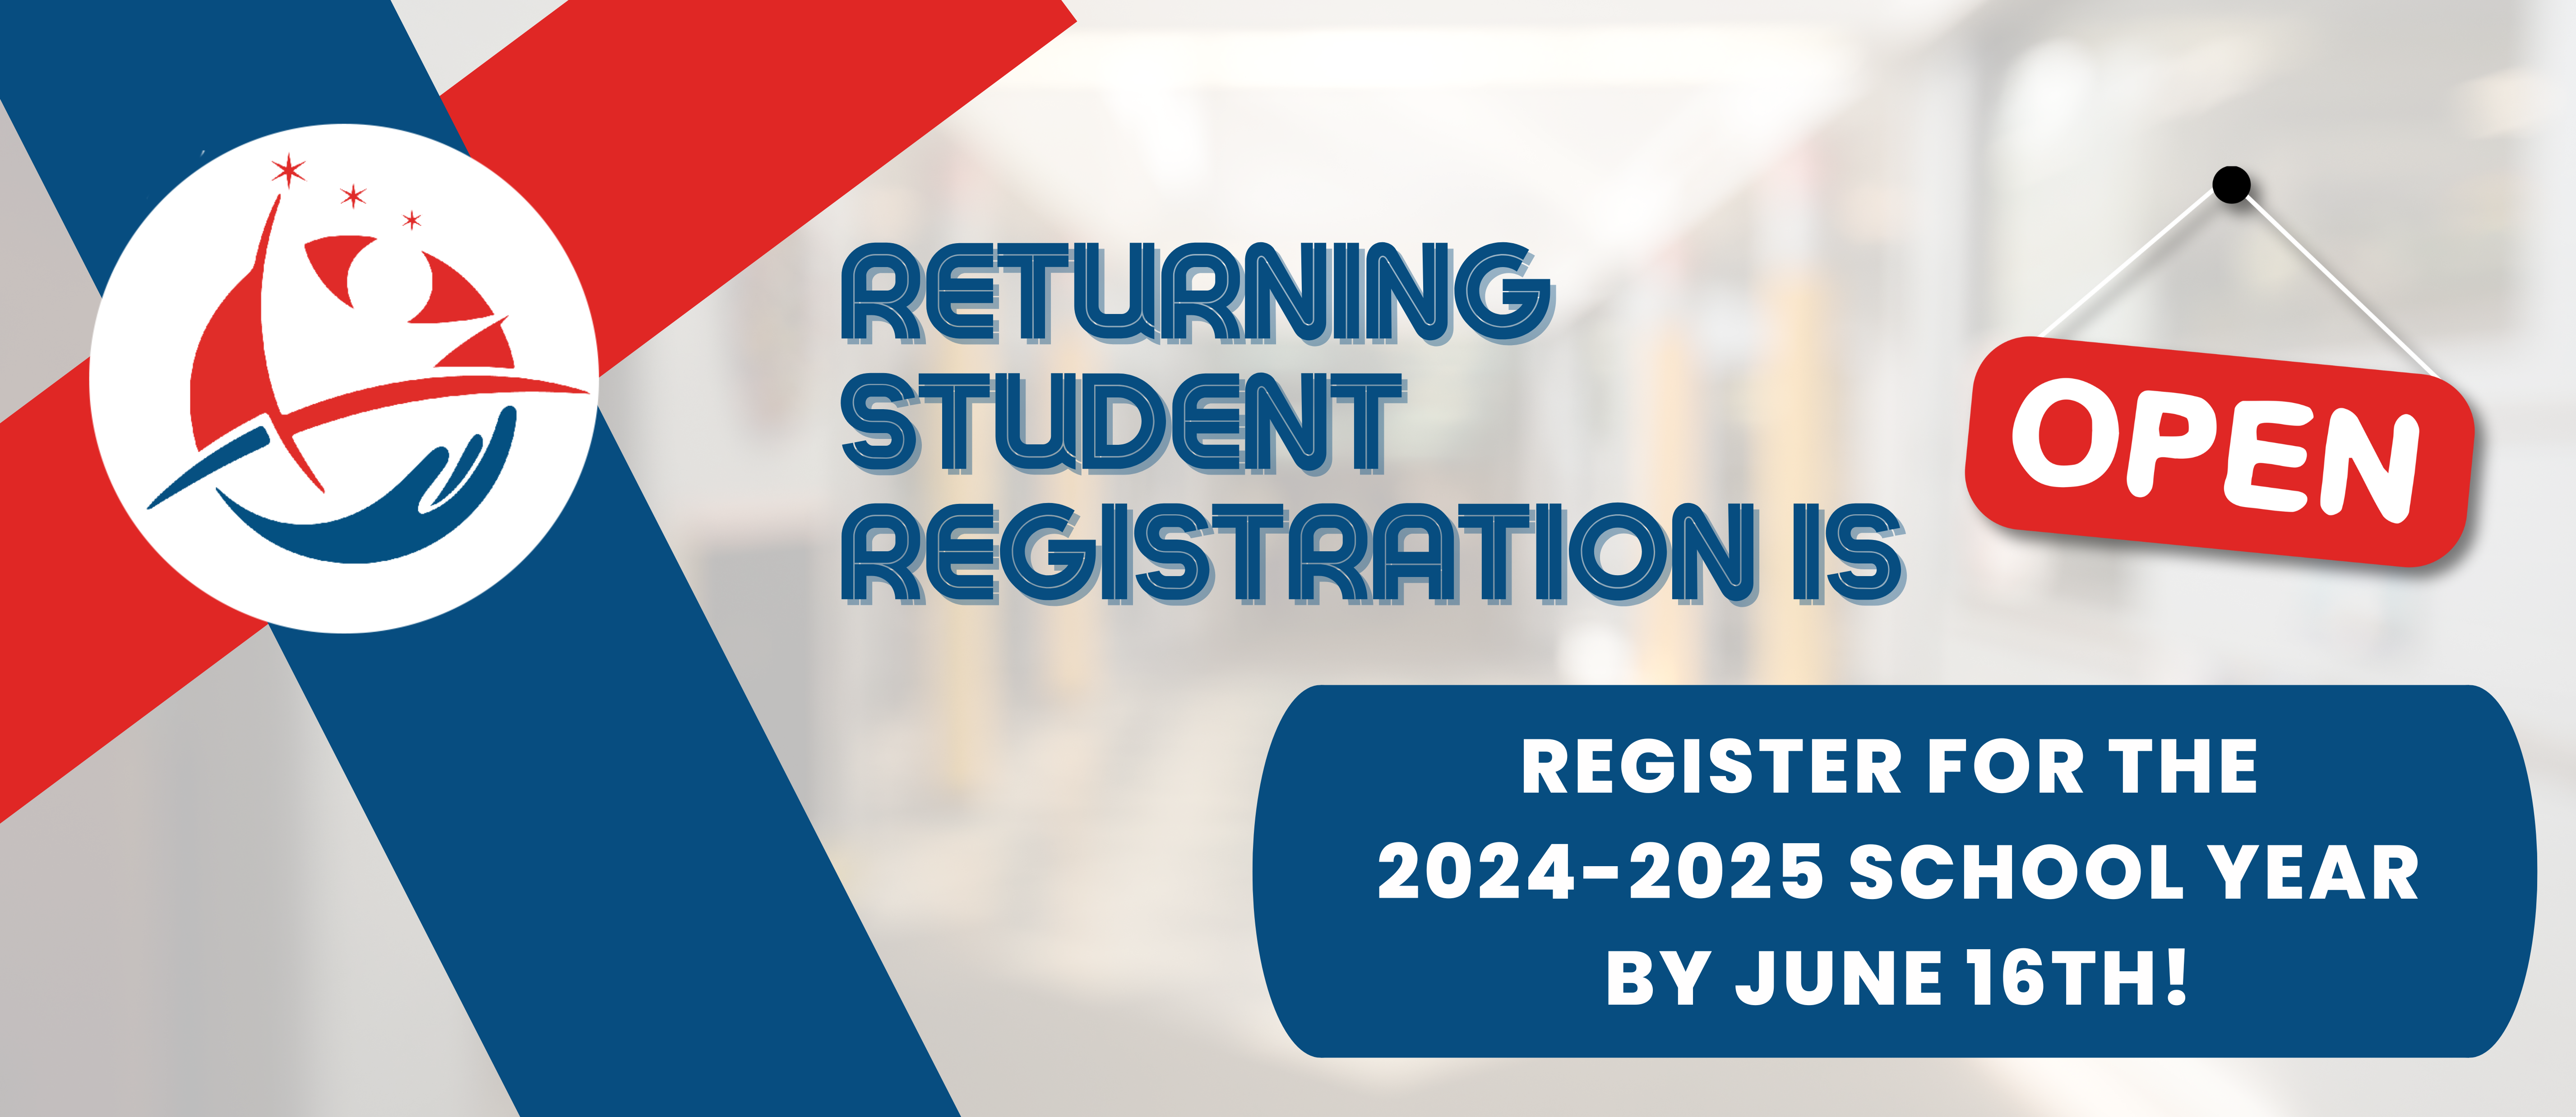 returning student registration is OPEN!